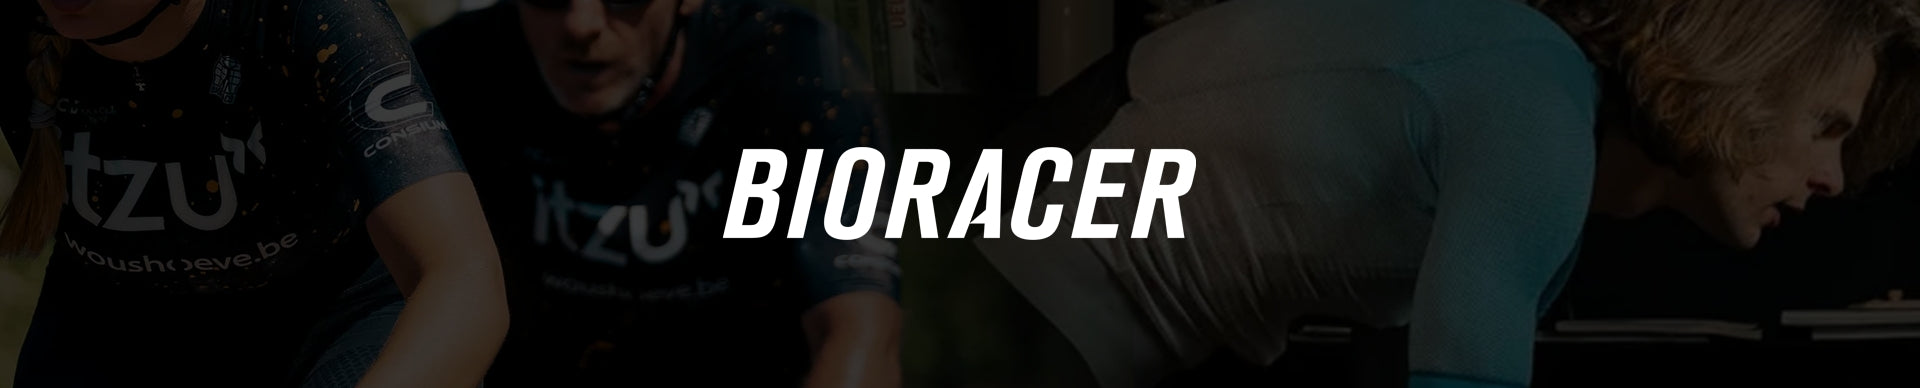 bioracer-banner-header.jpg__PID:e87c532d-738f-4145-be5a-fcaffb47e484